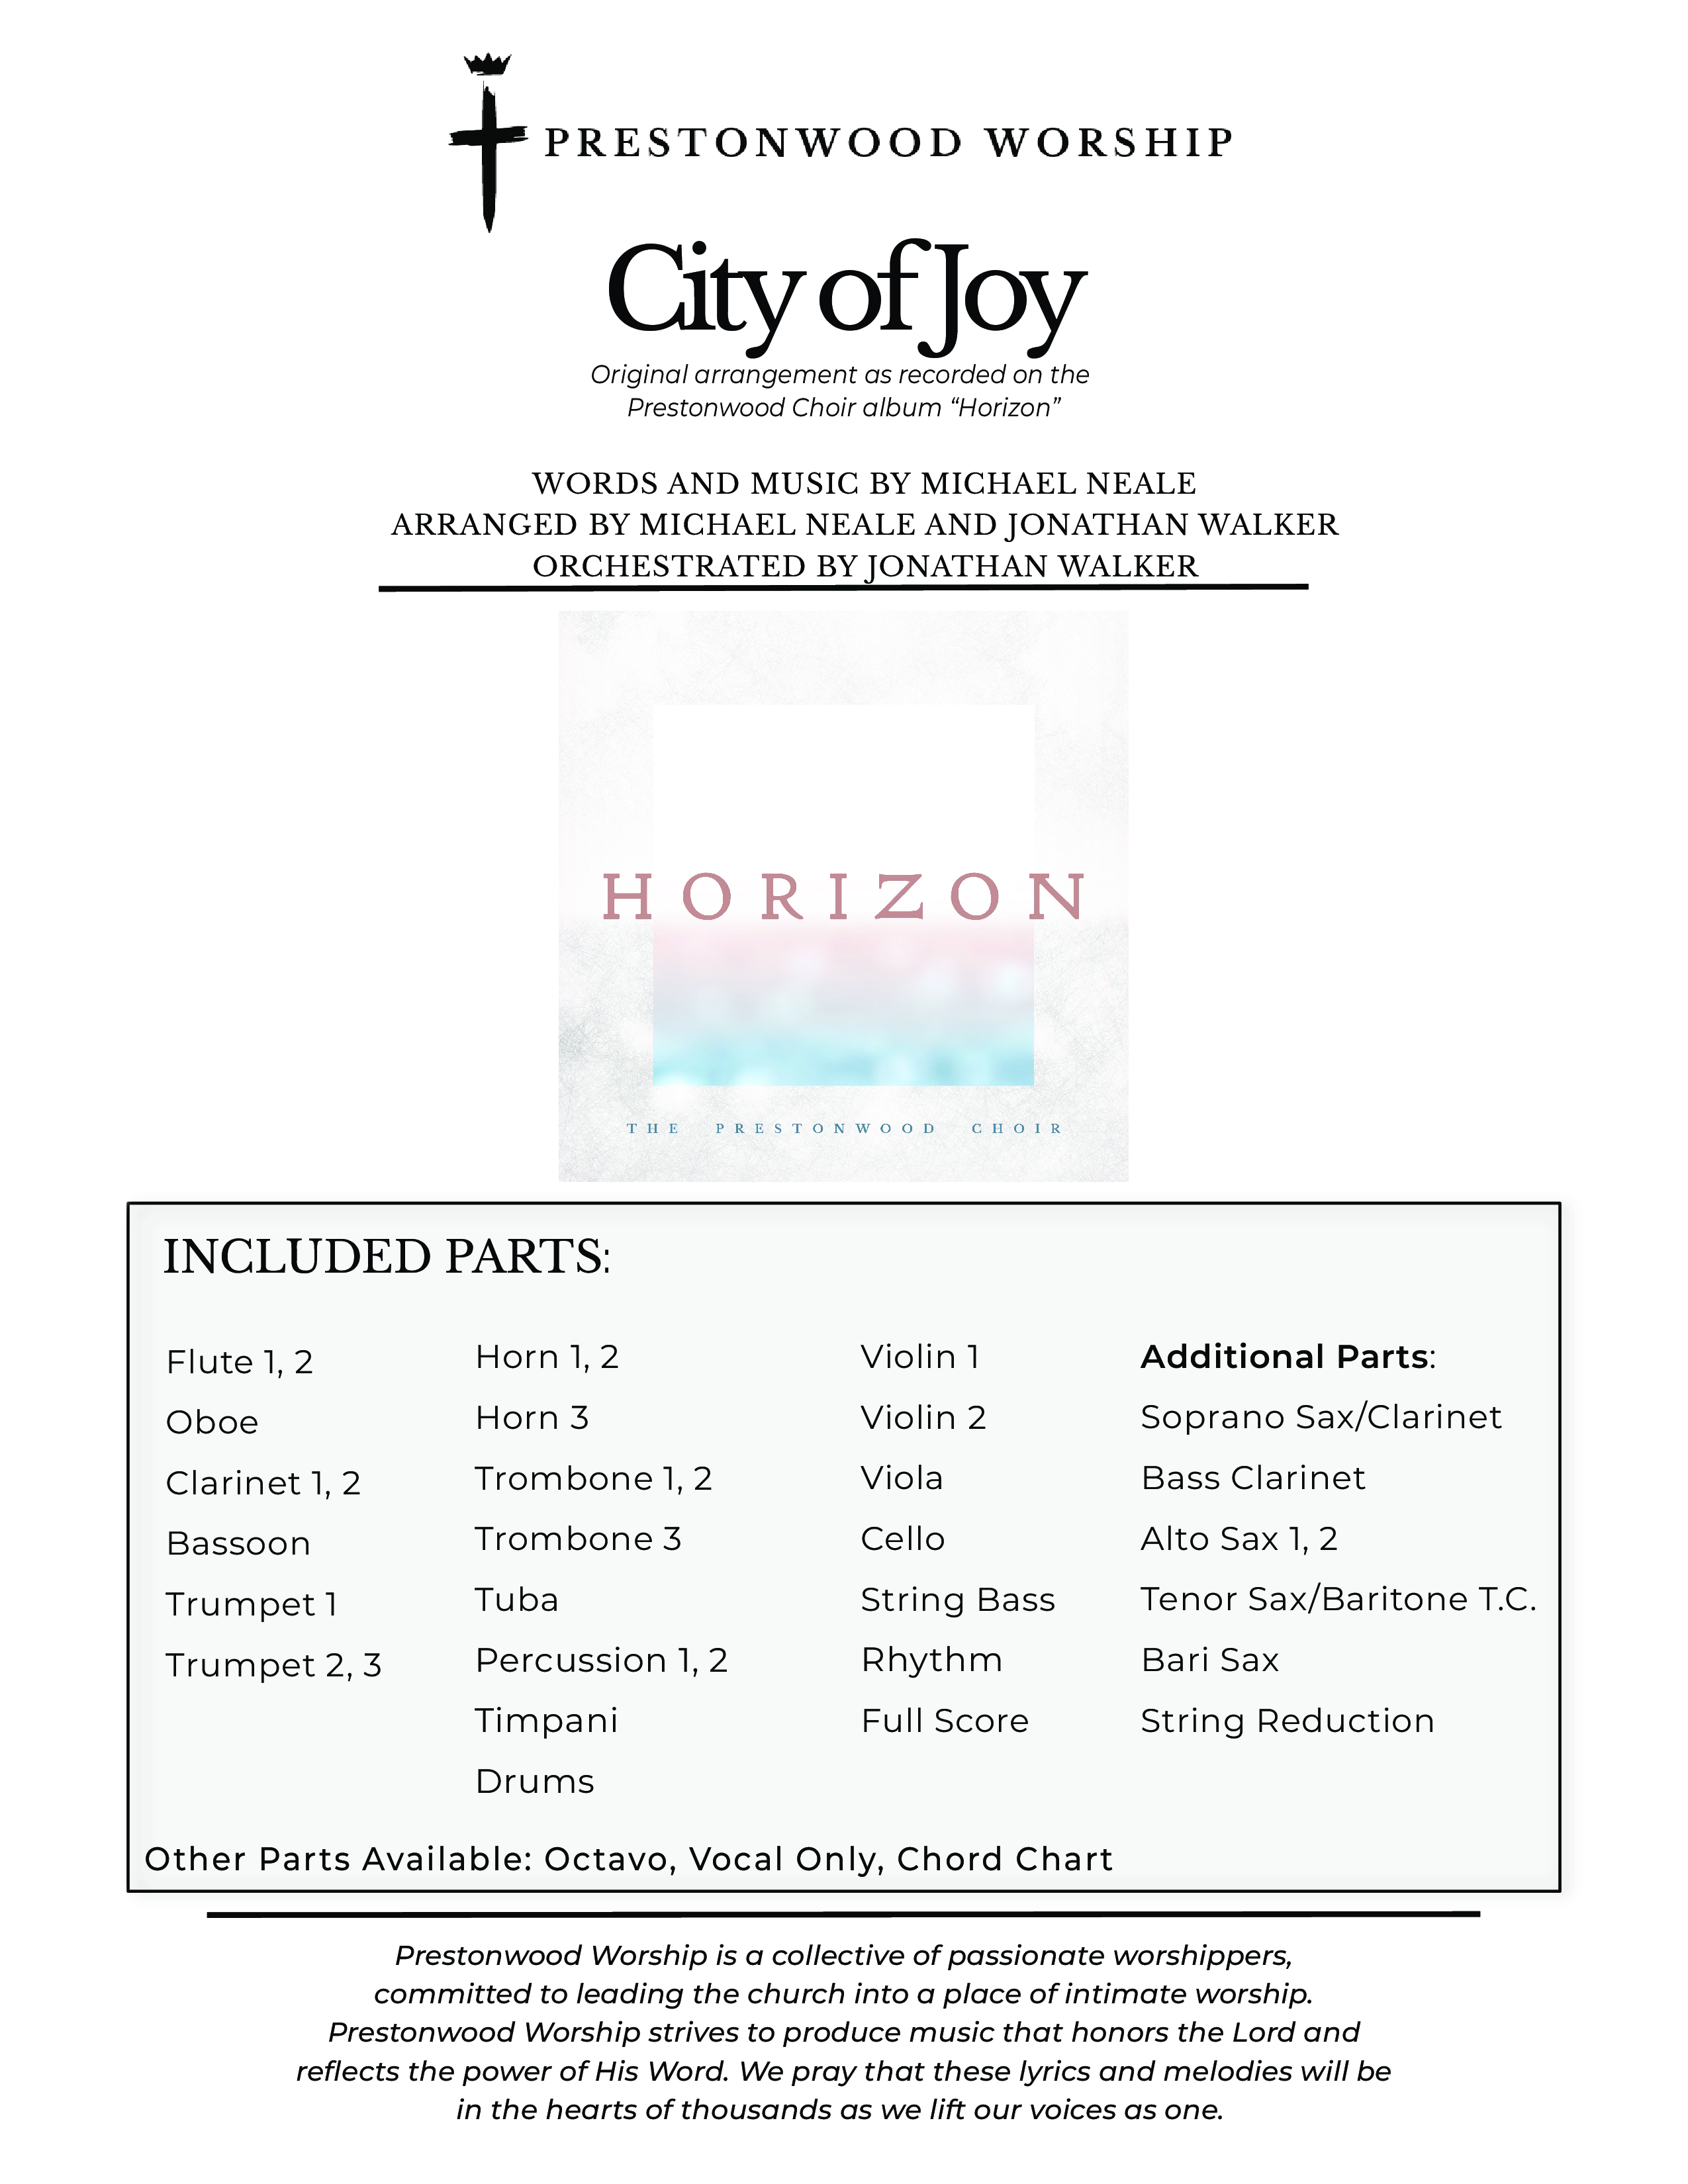 City Of Joy (Choral Anthem SATB) Orchestration (Prestonwood Worship / Prestonwood Choir / Arr. Michael Neale / Orch. Jonathan Walker)